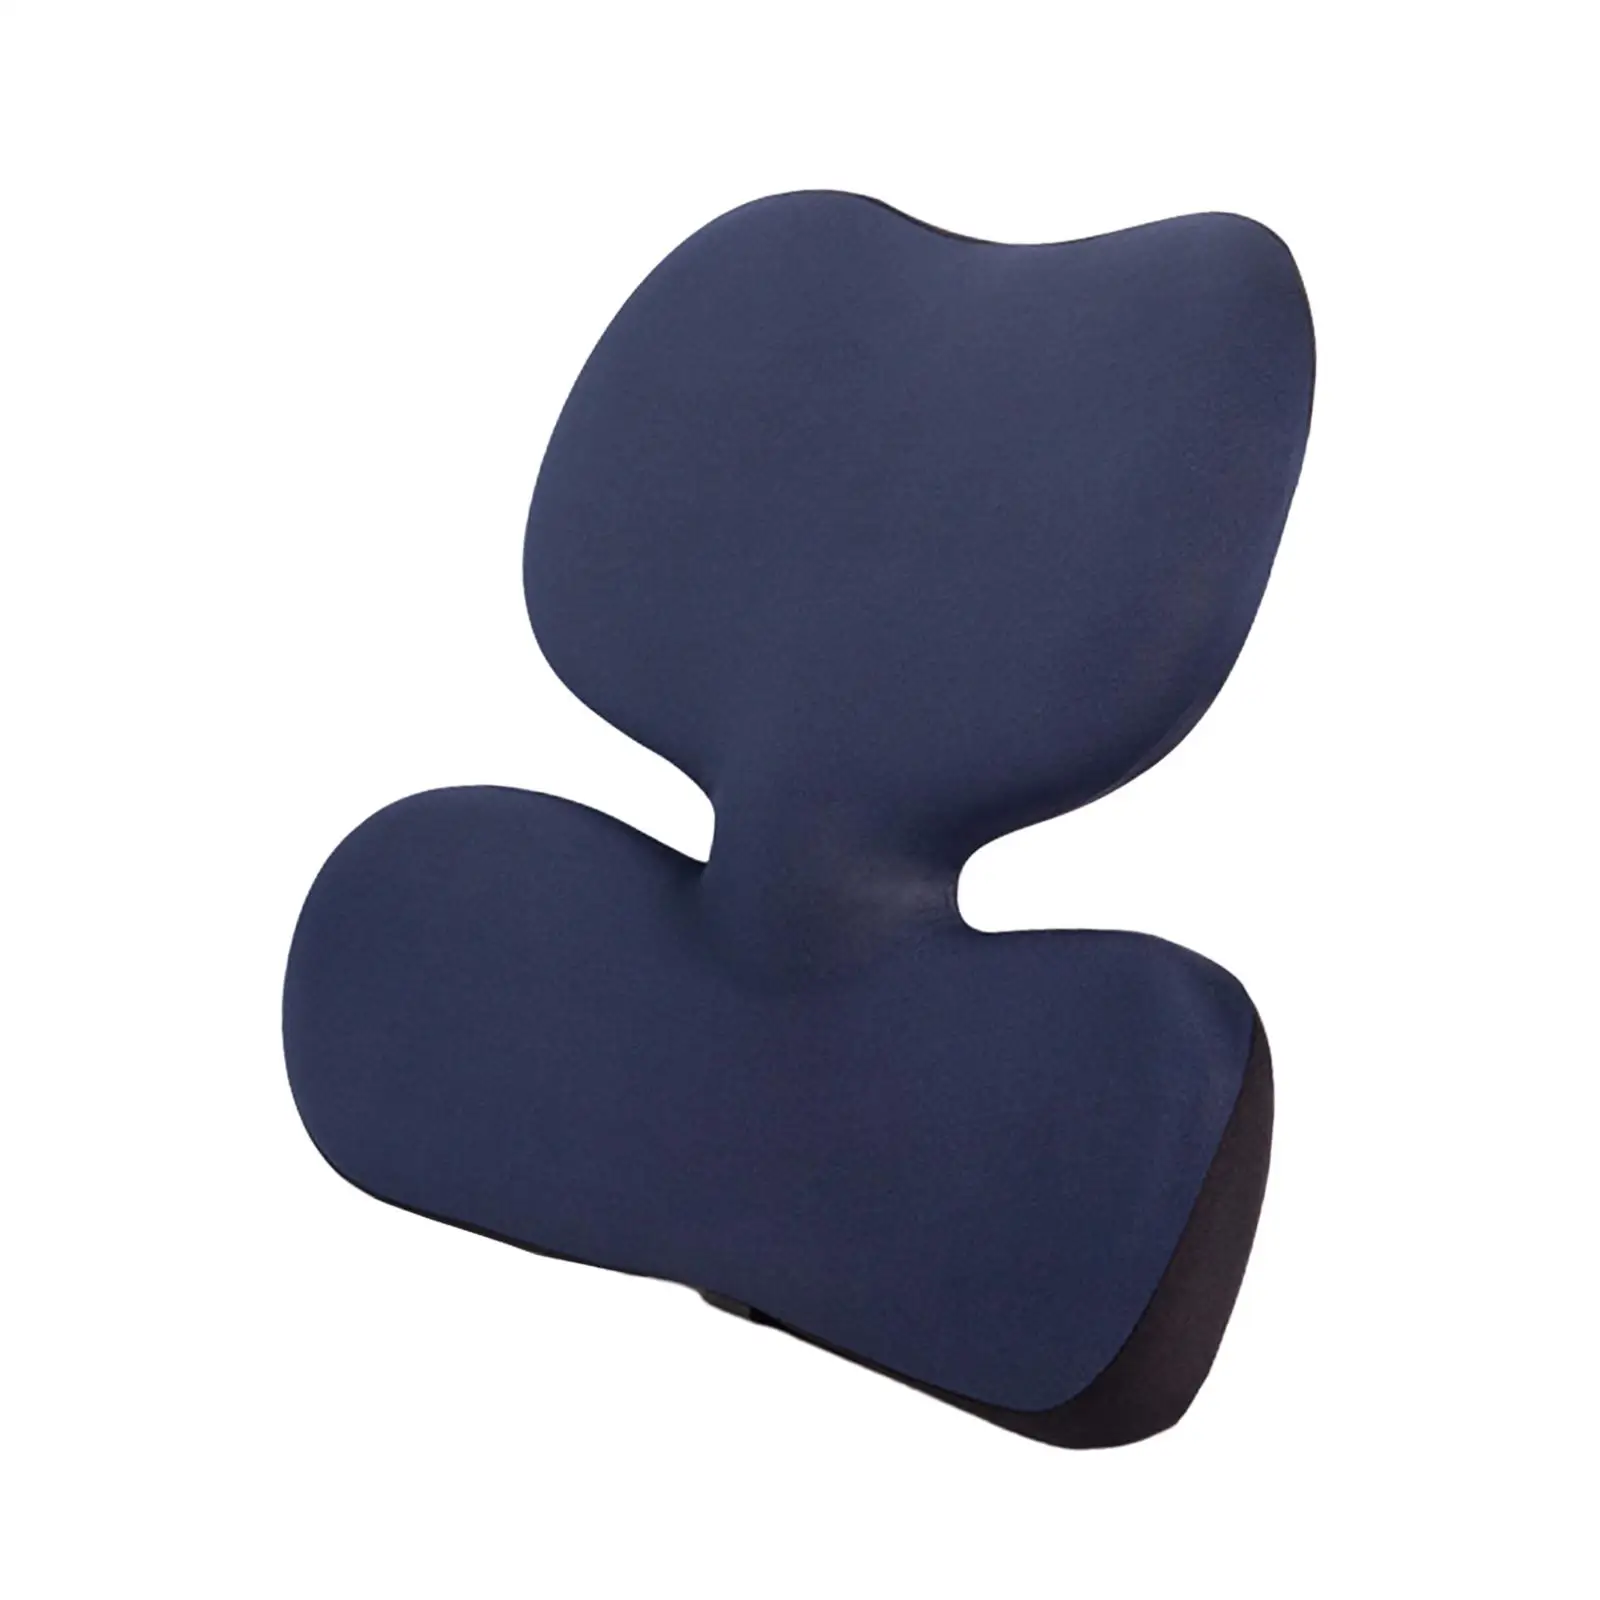 Lumbar Support Pillow Comfortable Portable Backrest Waist Cushion Waist Support Pillow for Travel Dorm Car Gaming Chair Office